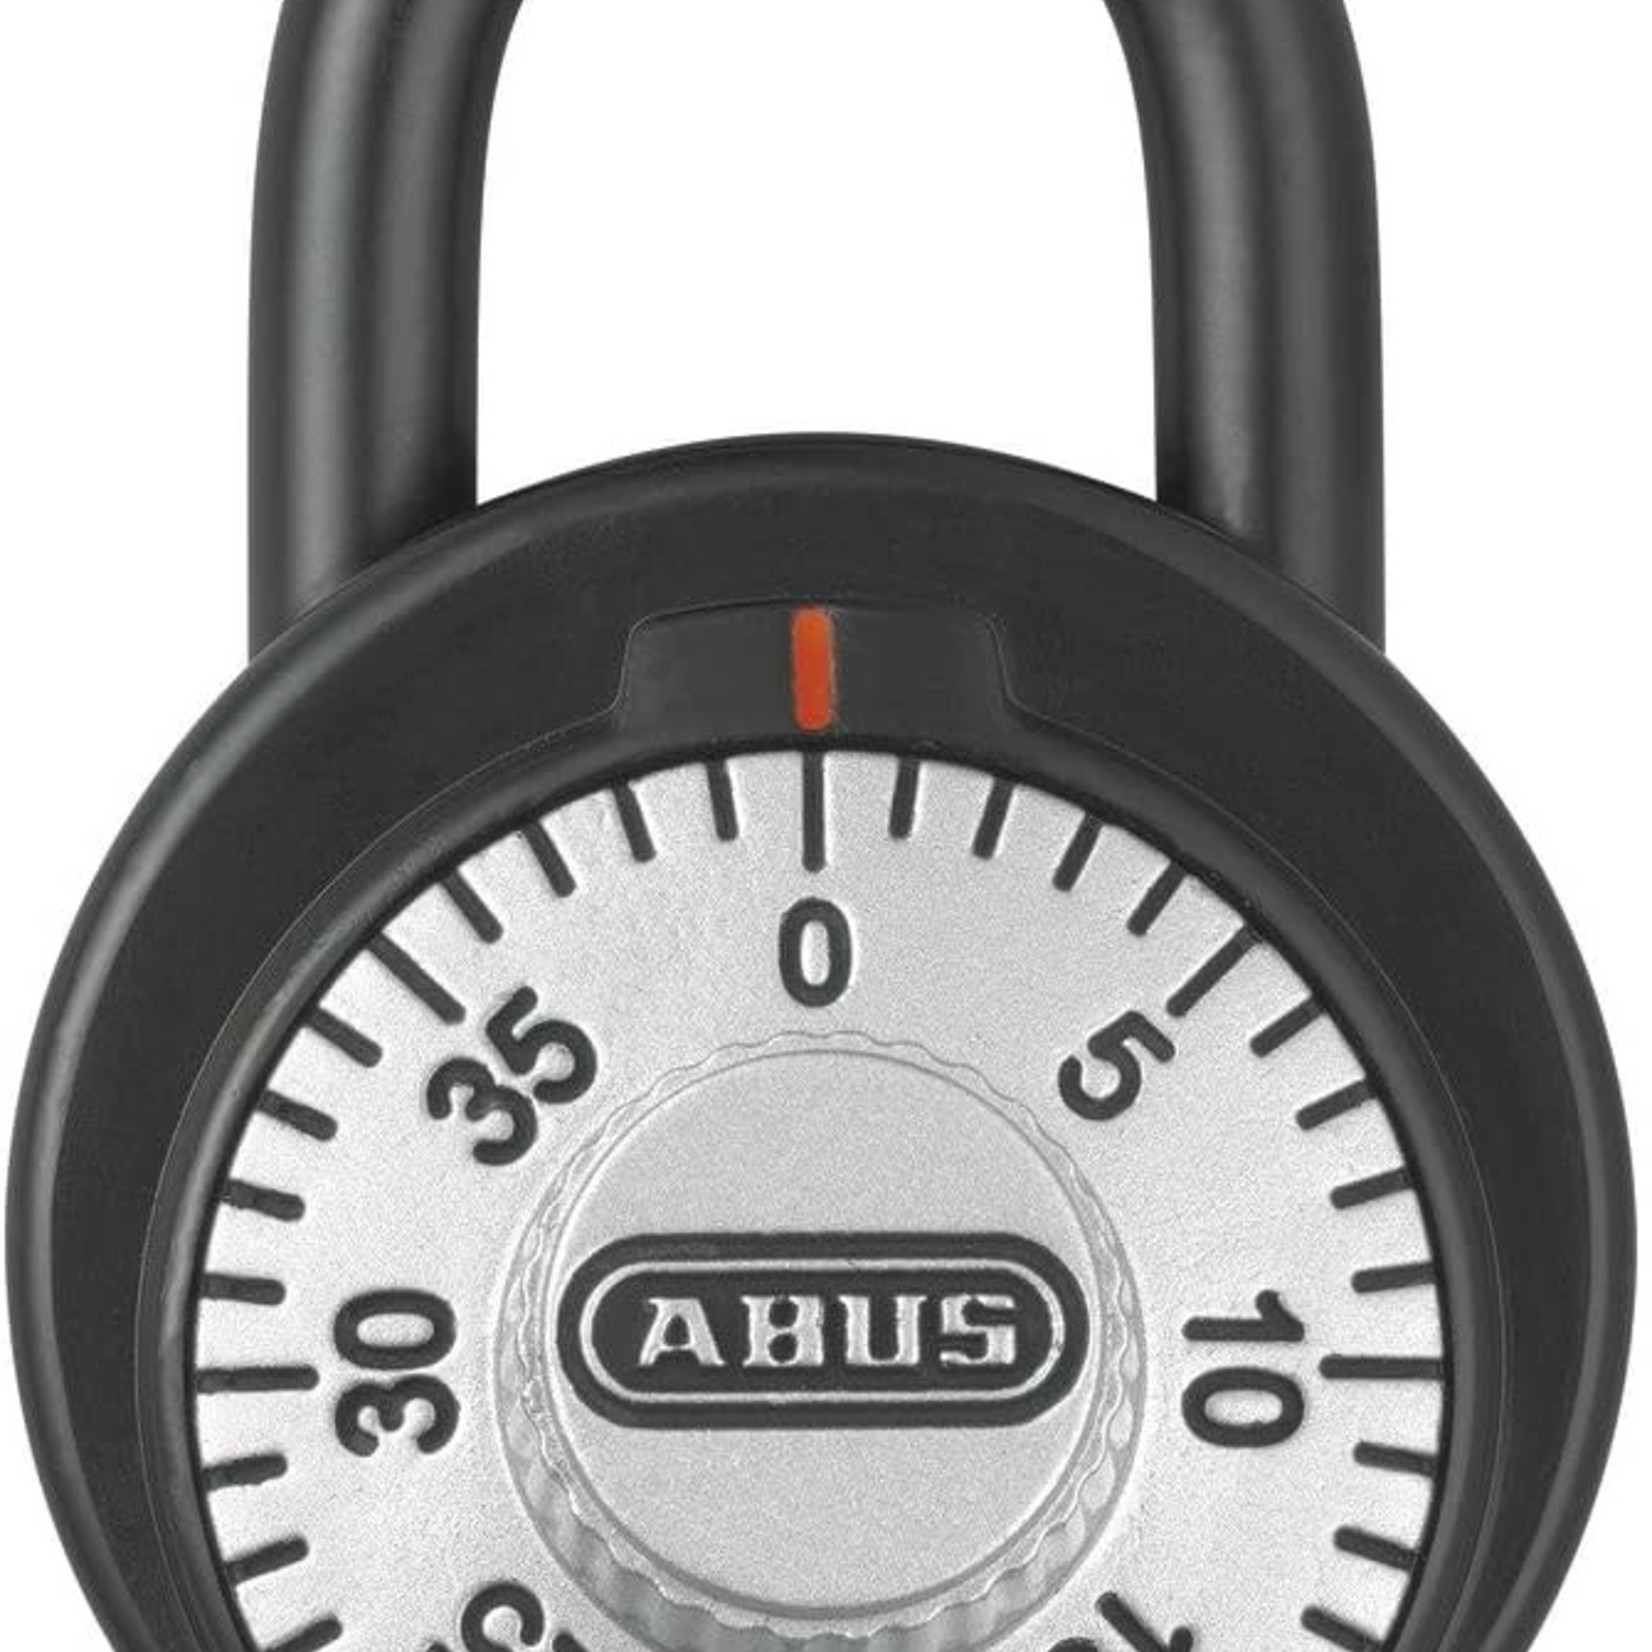 Abus, 78C, Foot Locker combination lock